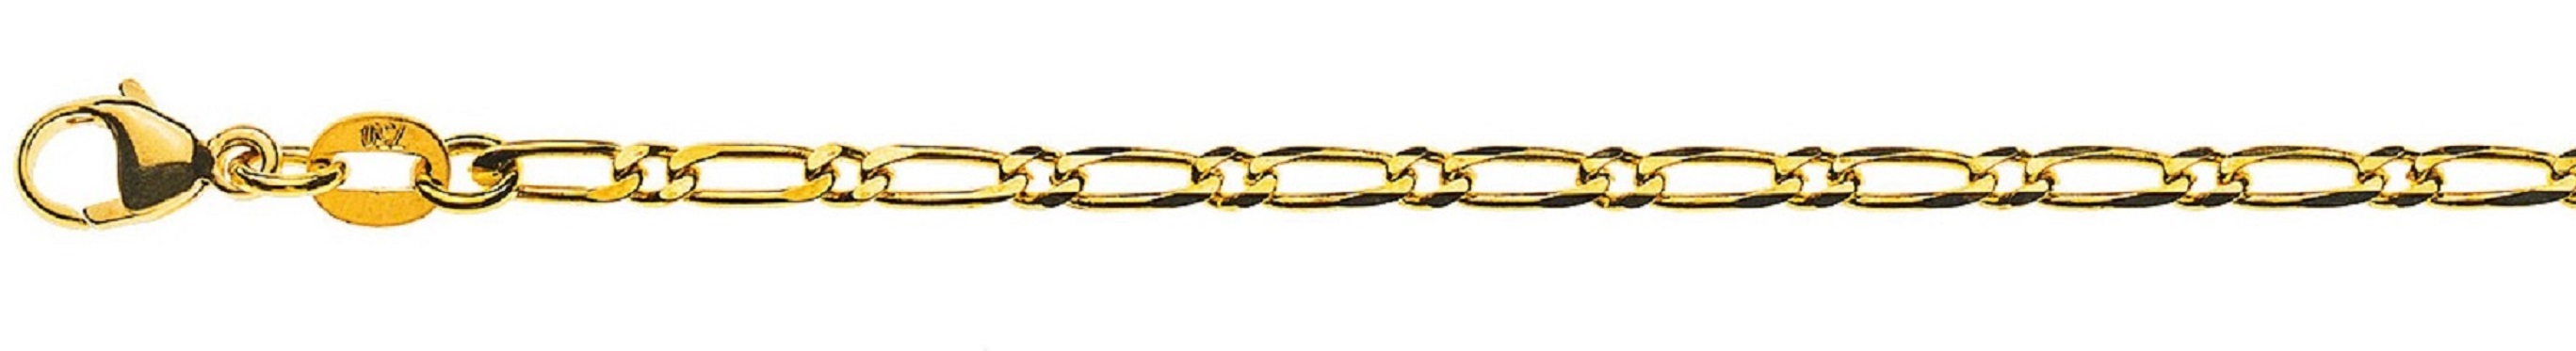 AURONOS Prestige Necklace yellow gold 18K Figaro necklace 60cm 2.3mm